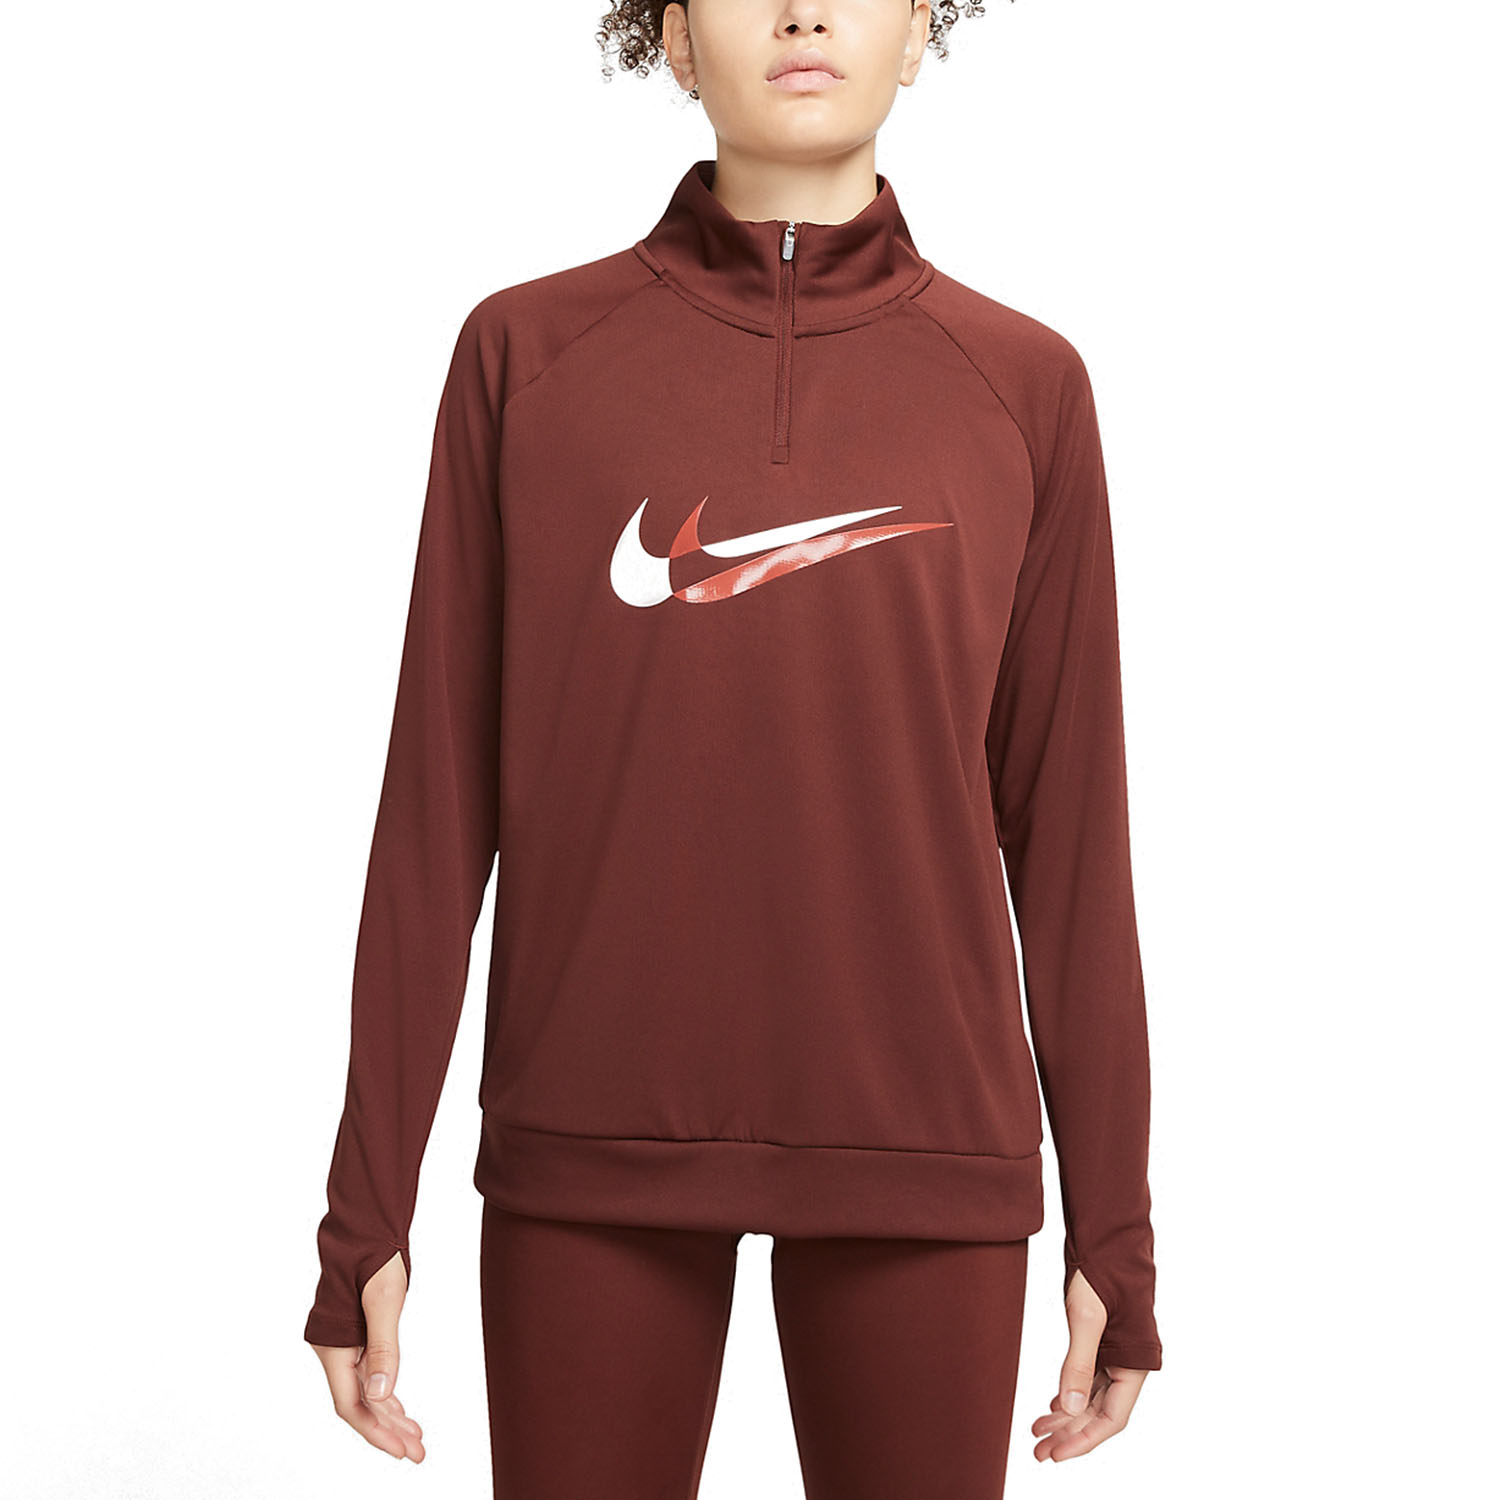 Nike Dri-FIT Swoosh Run Maglia - Bronze Eclipse/Redstone/White